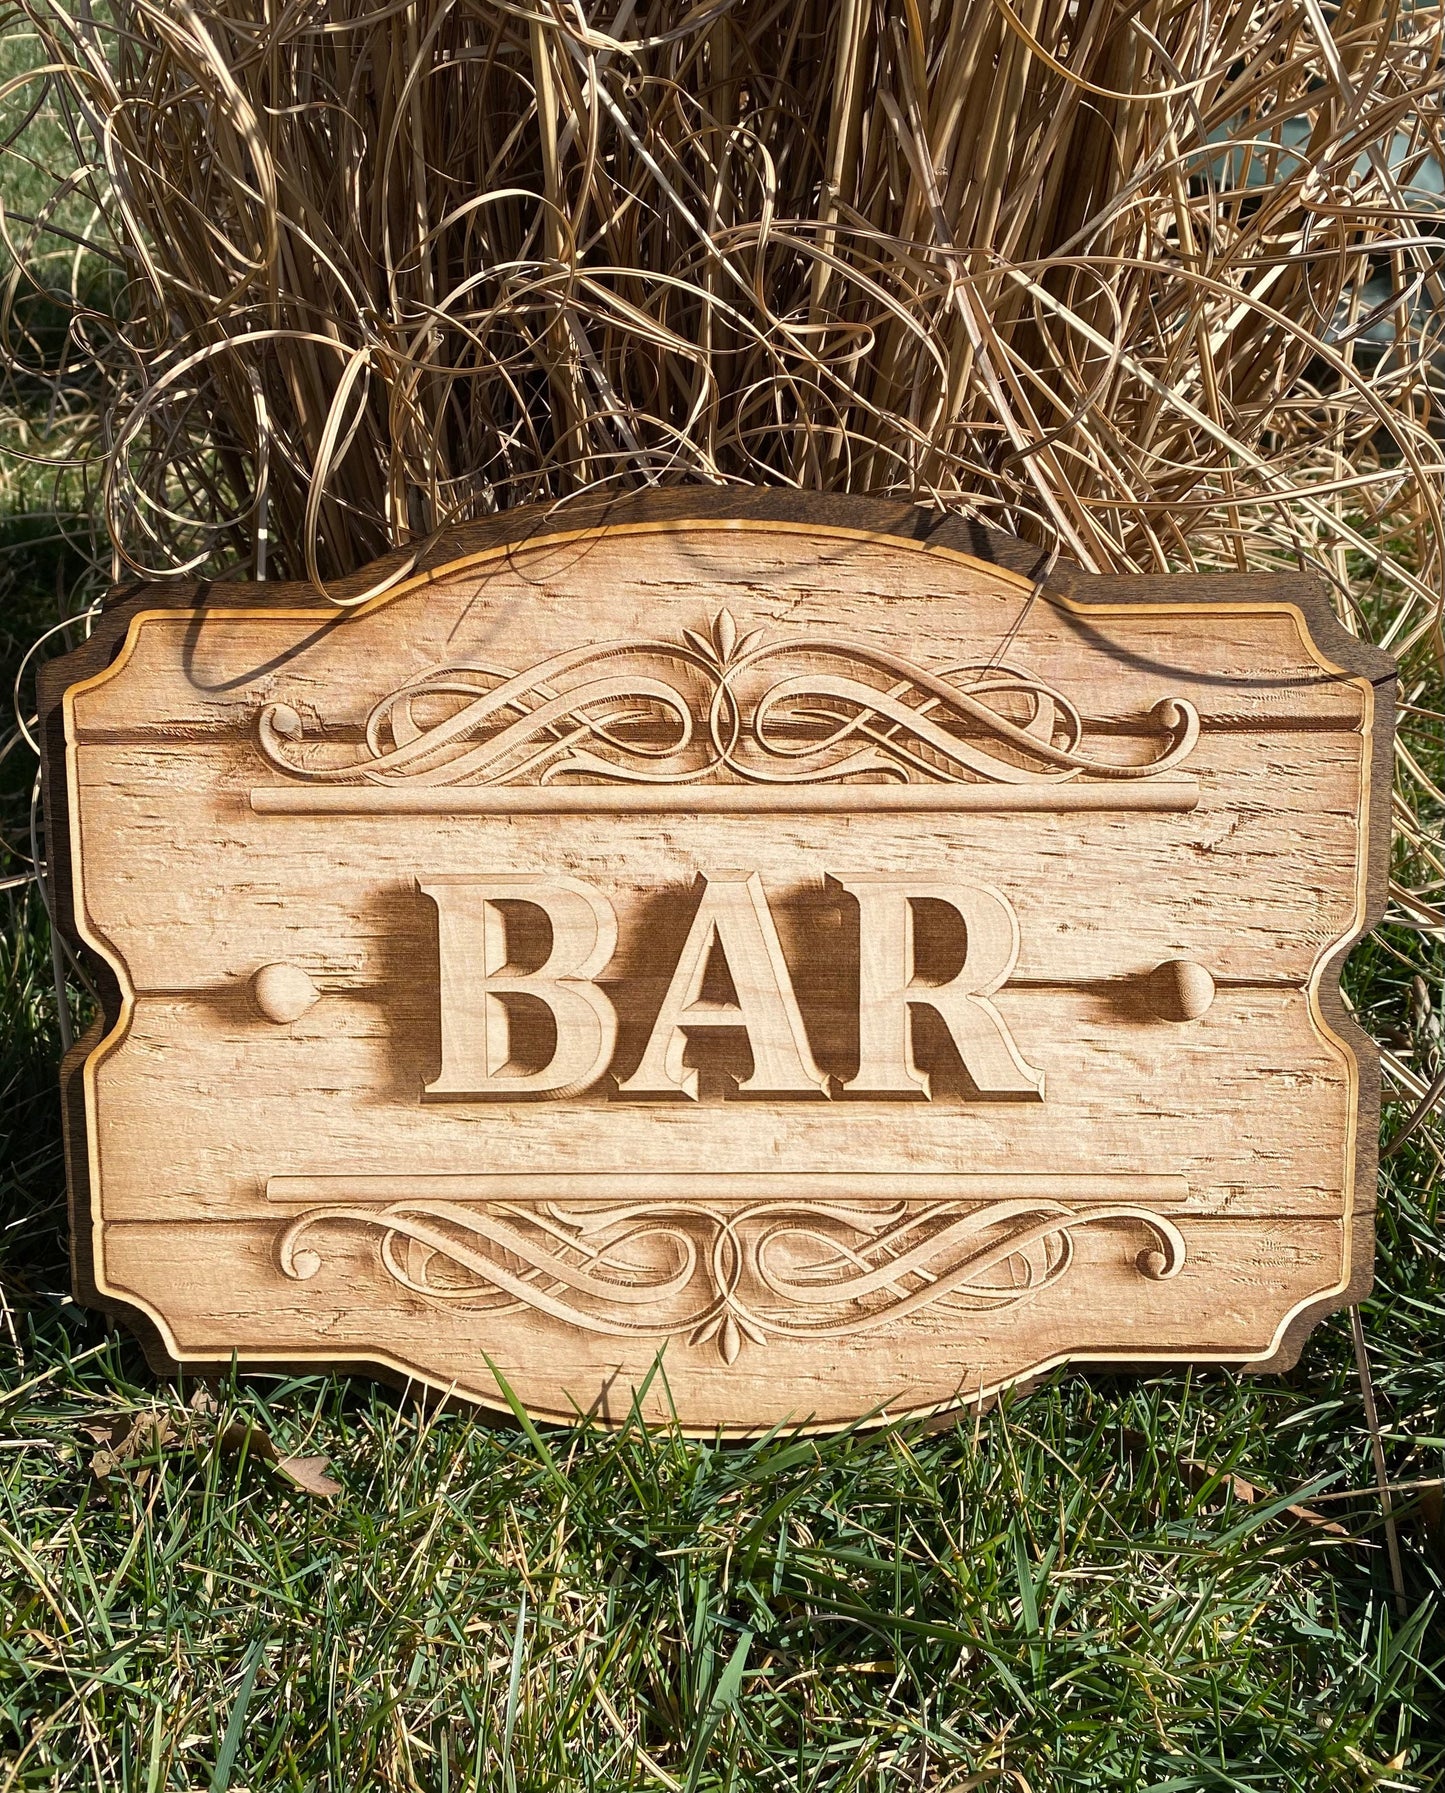 Wood Bar Sign, Laser Engraved Bar Sign, Bar Decor, Home Bar Sign